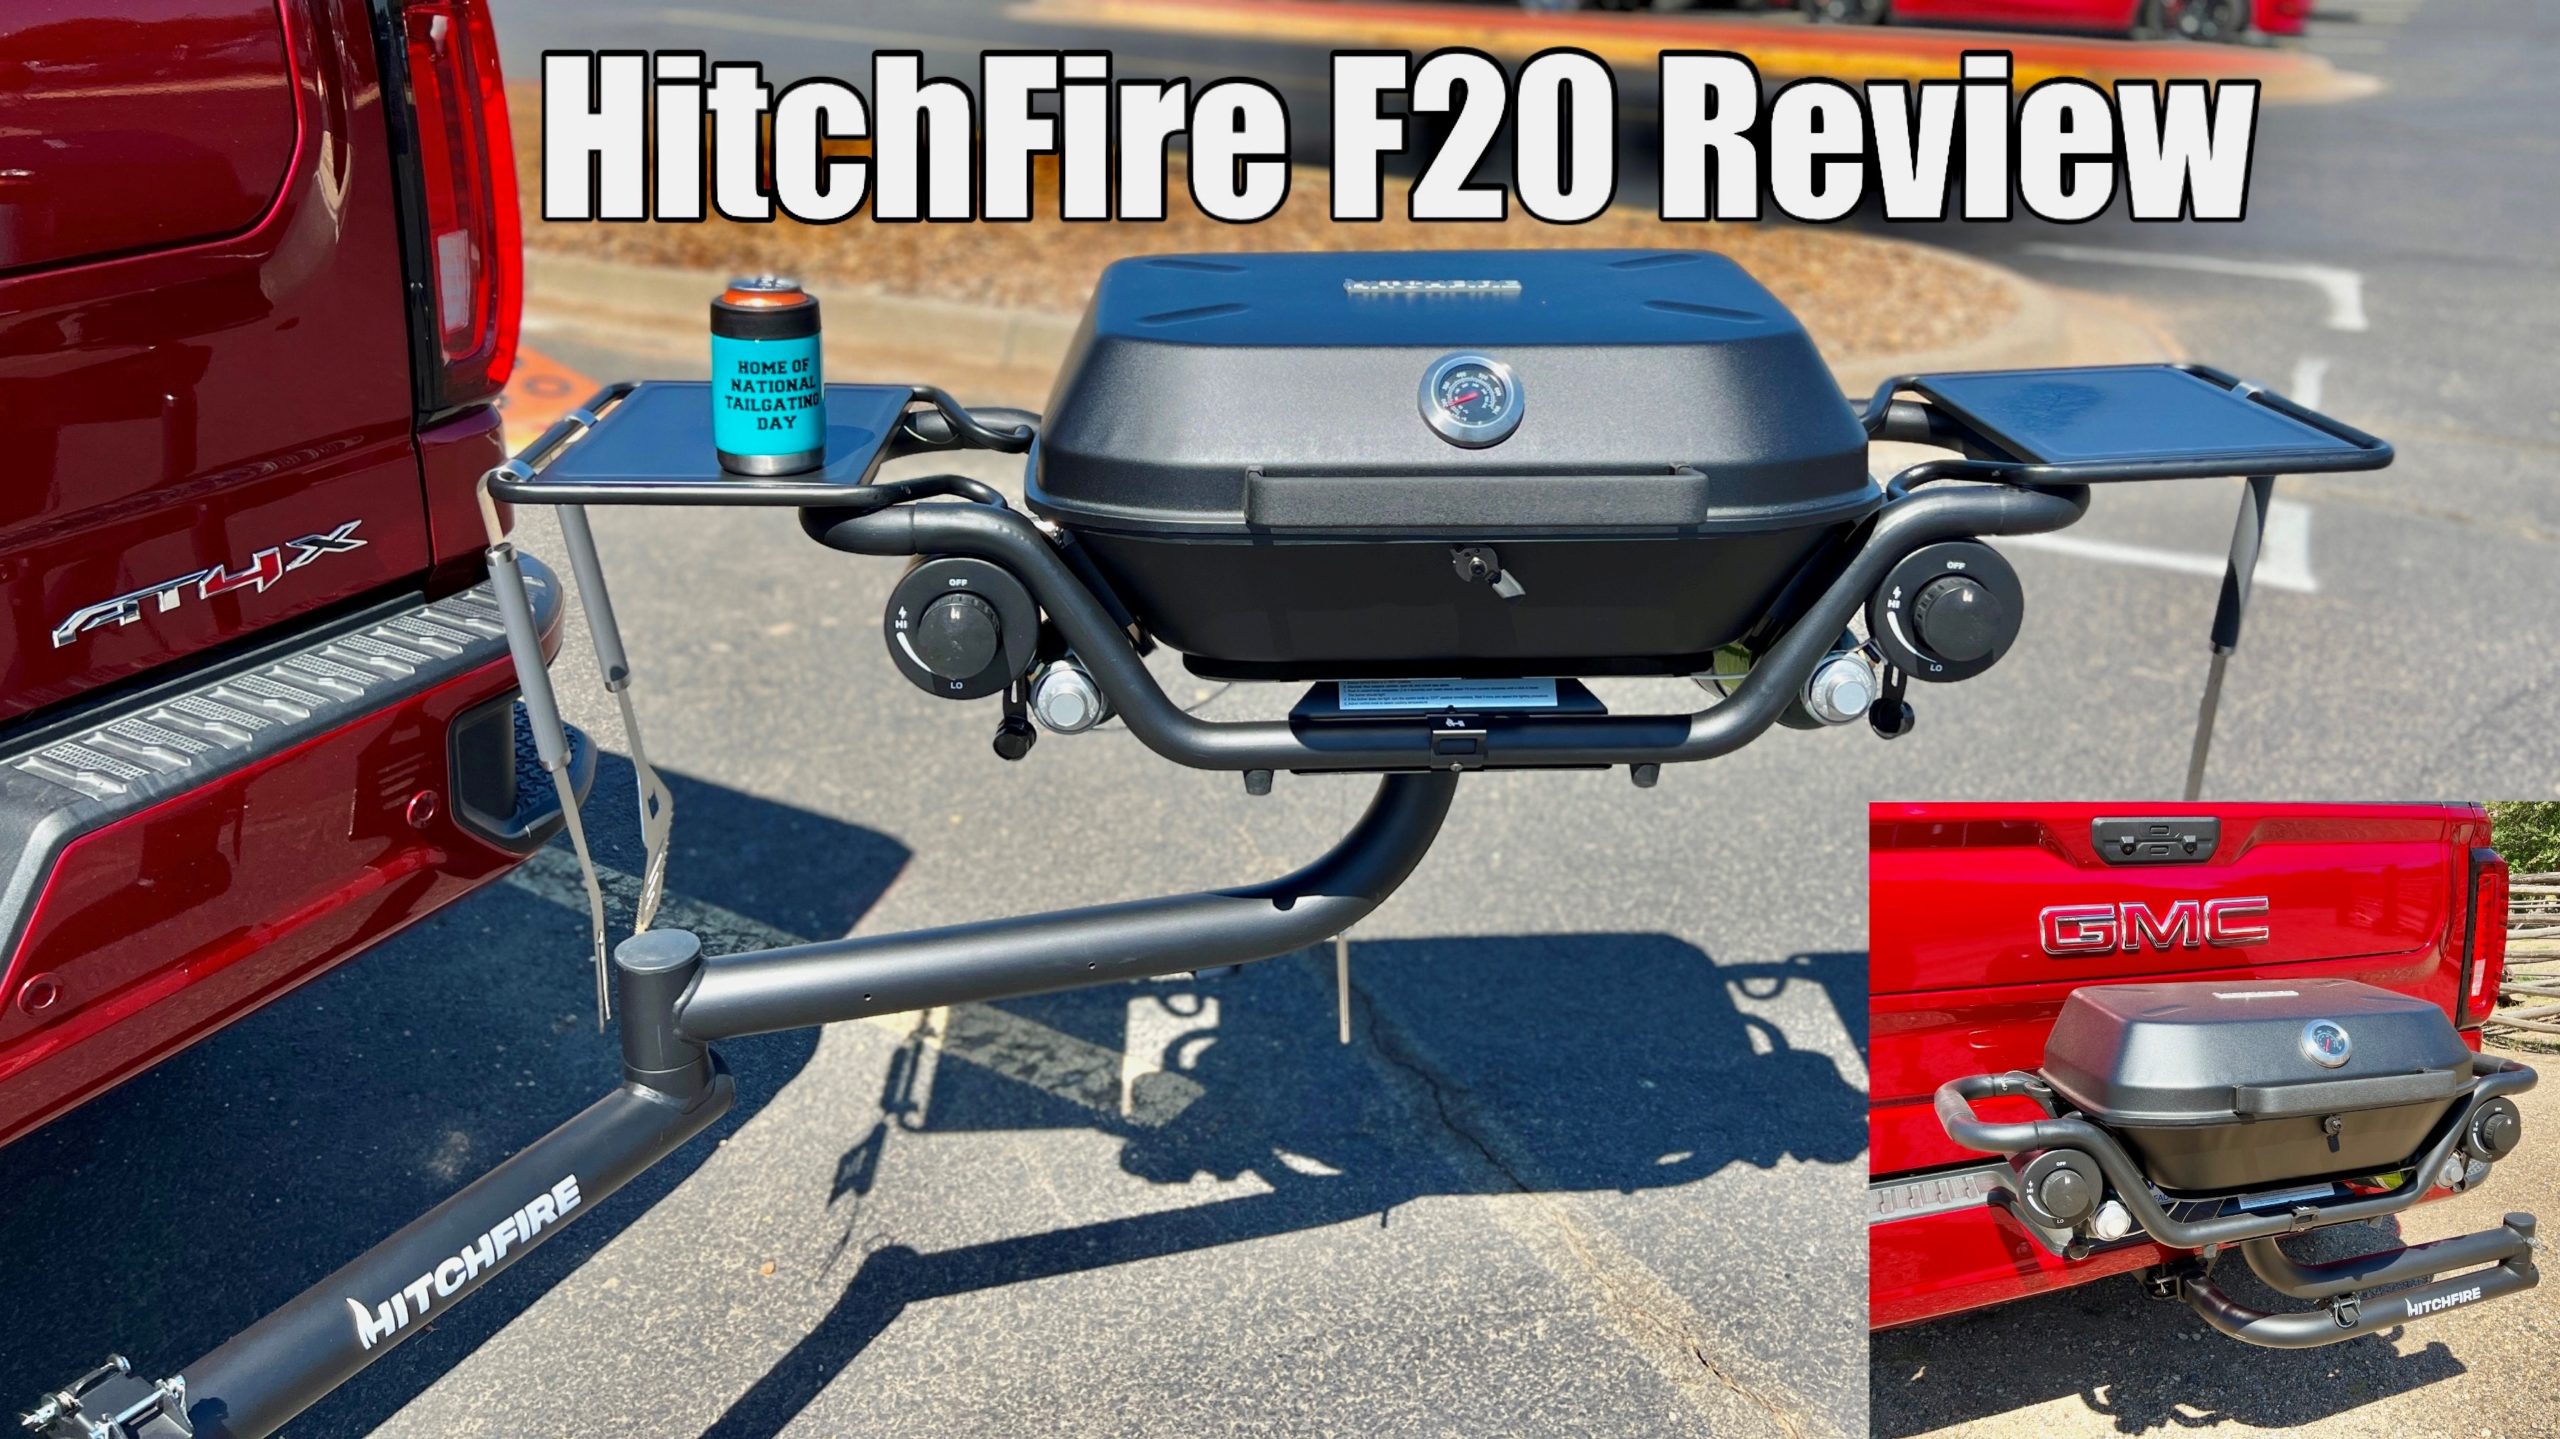 HitchFire Grilling Tool Set